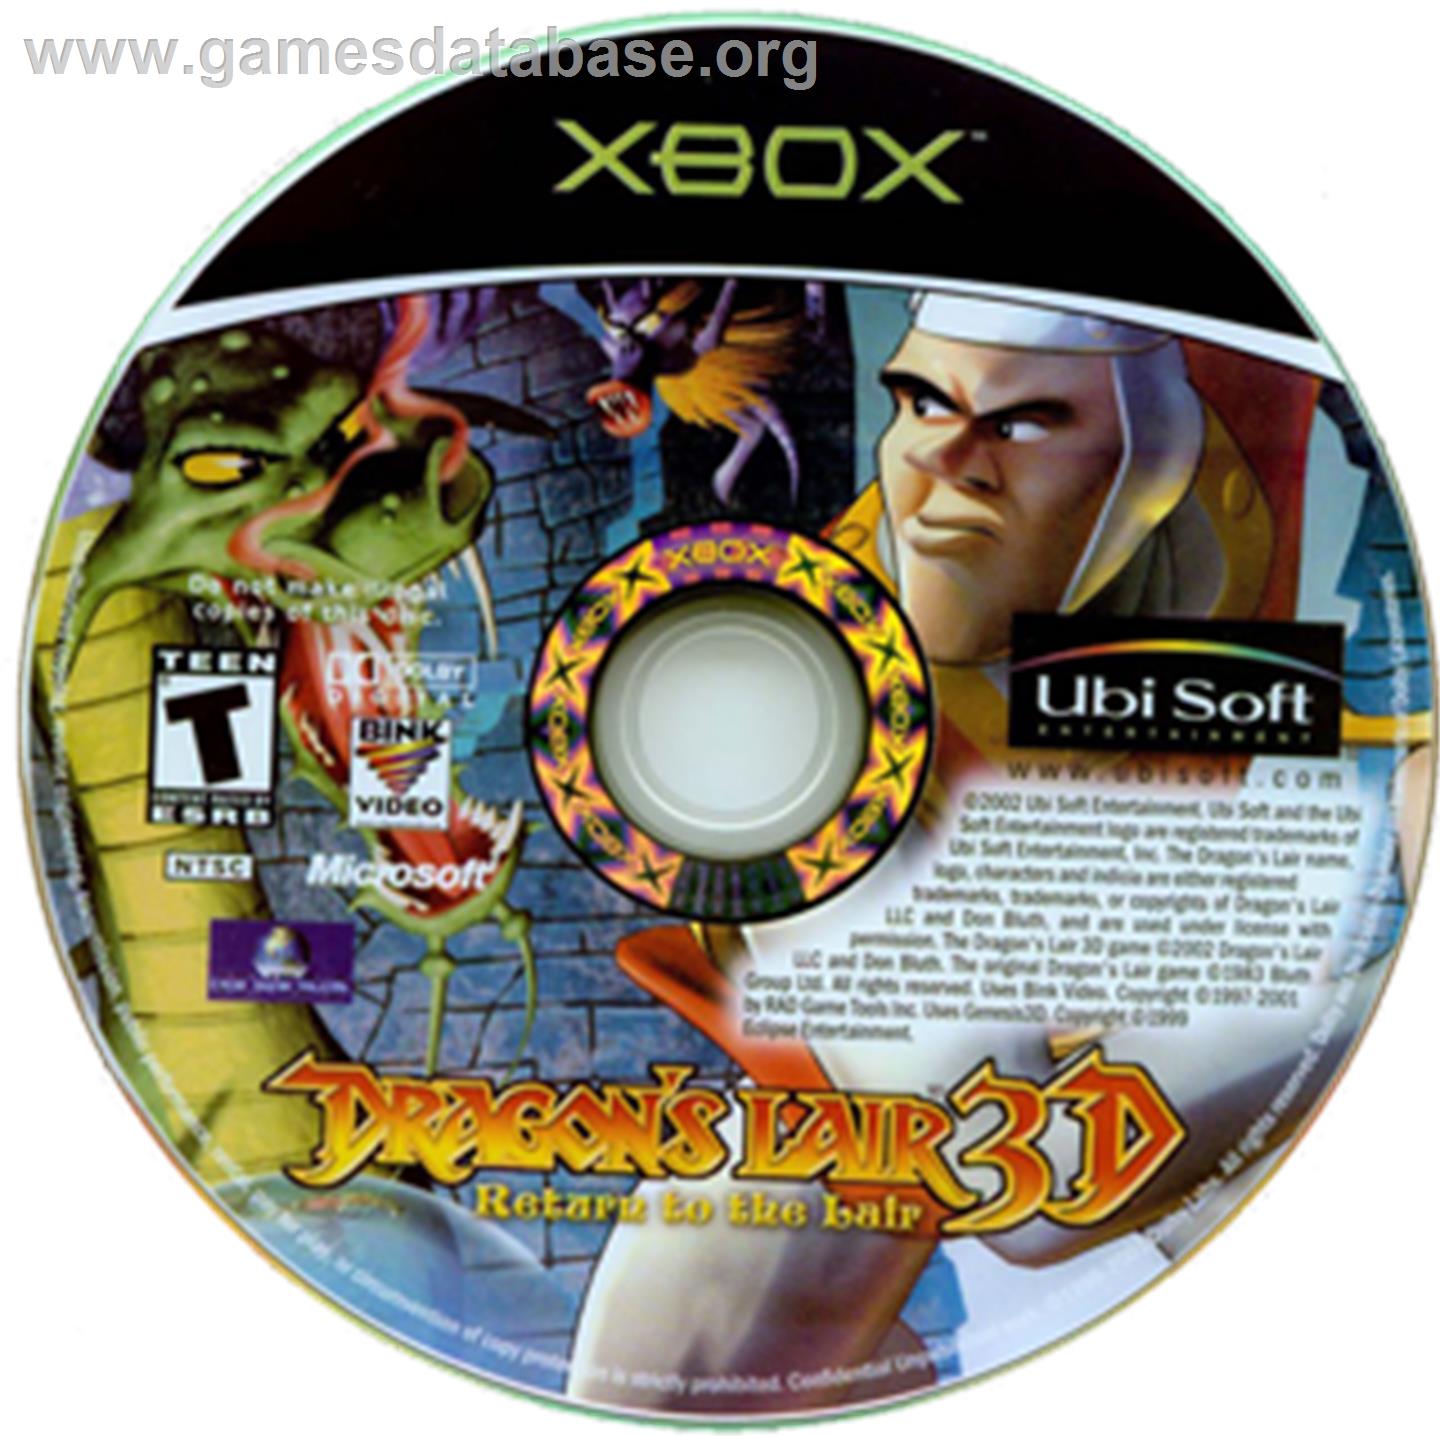 Dragon's Lair 3D: Return to the Lair - Microsoft Xbox - Artwork - CD